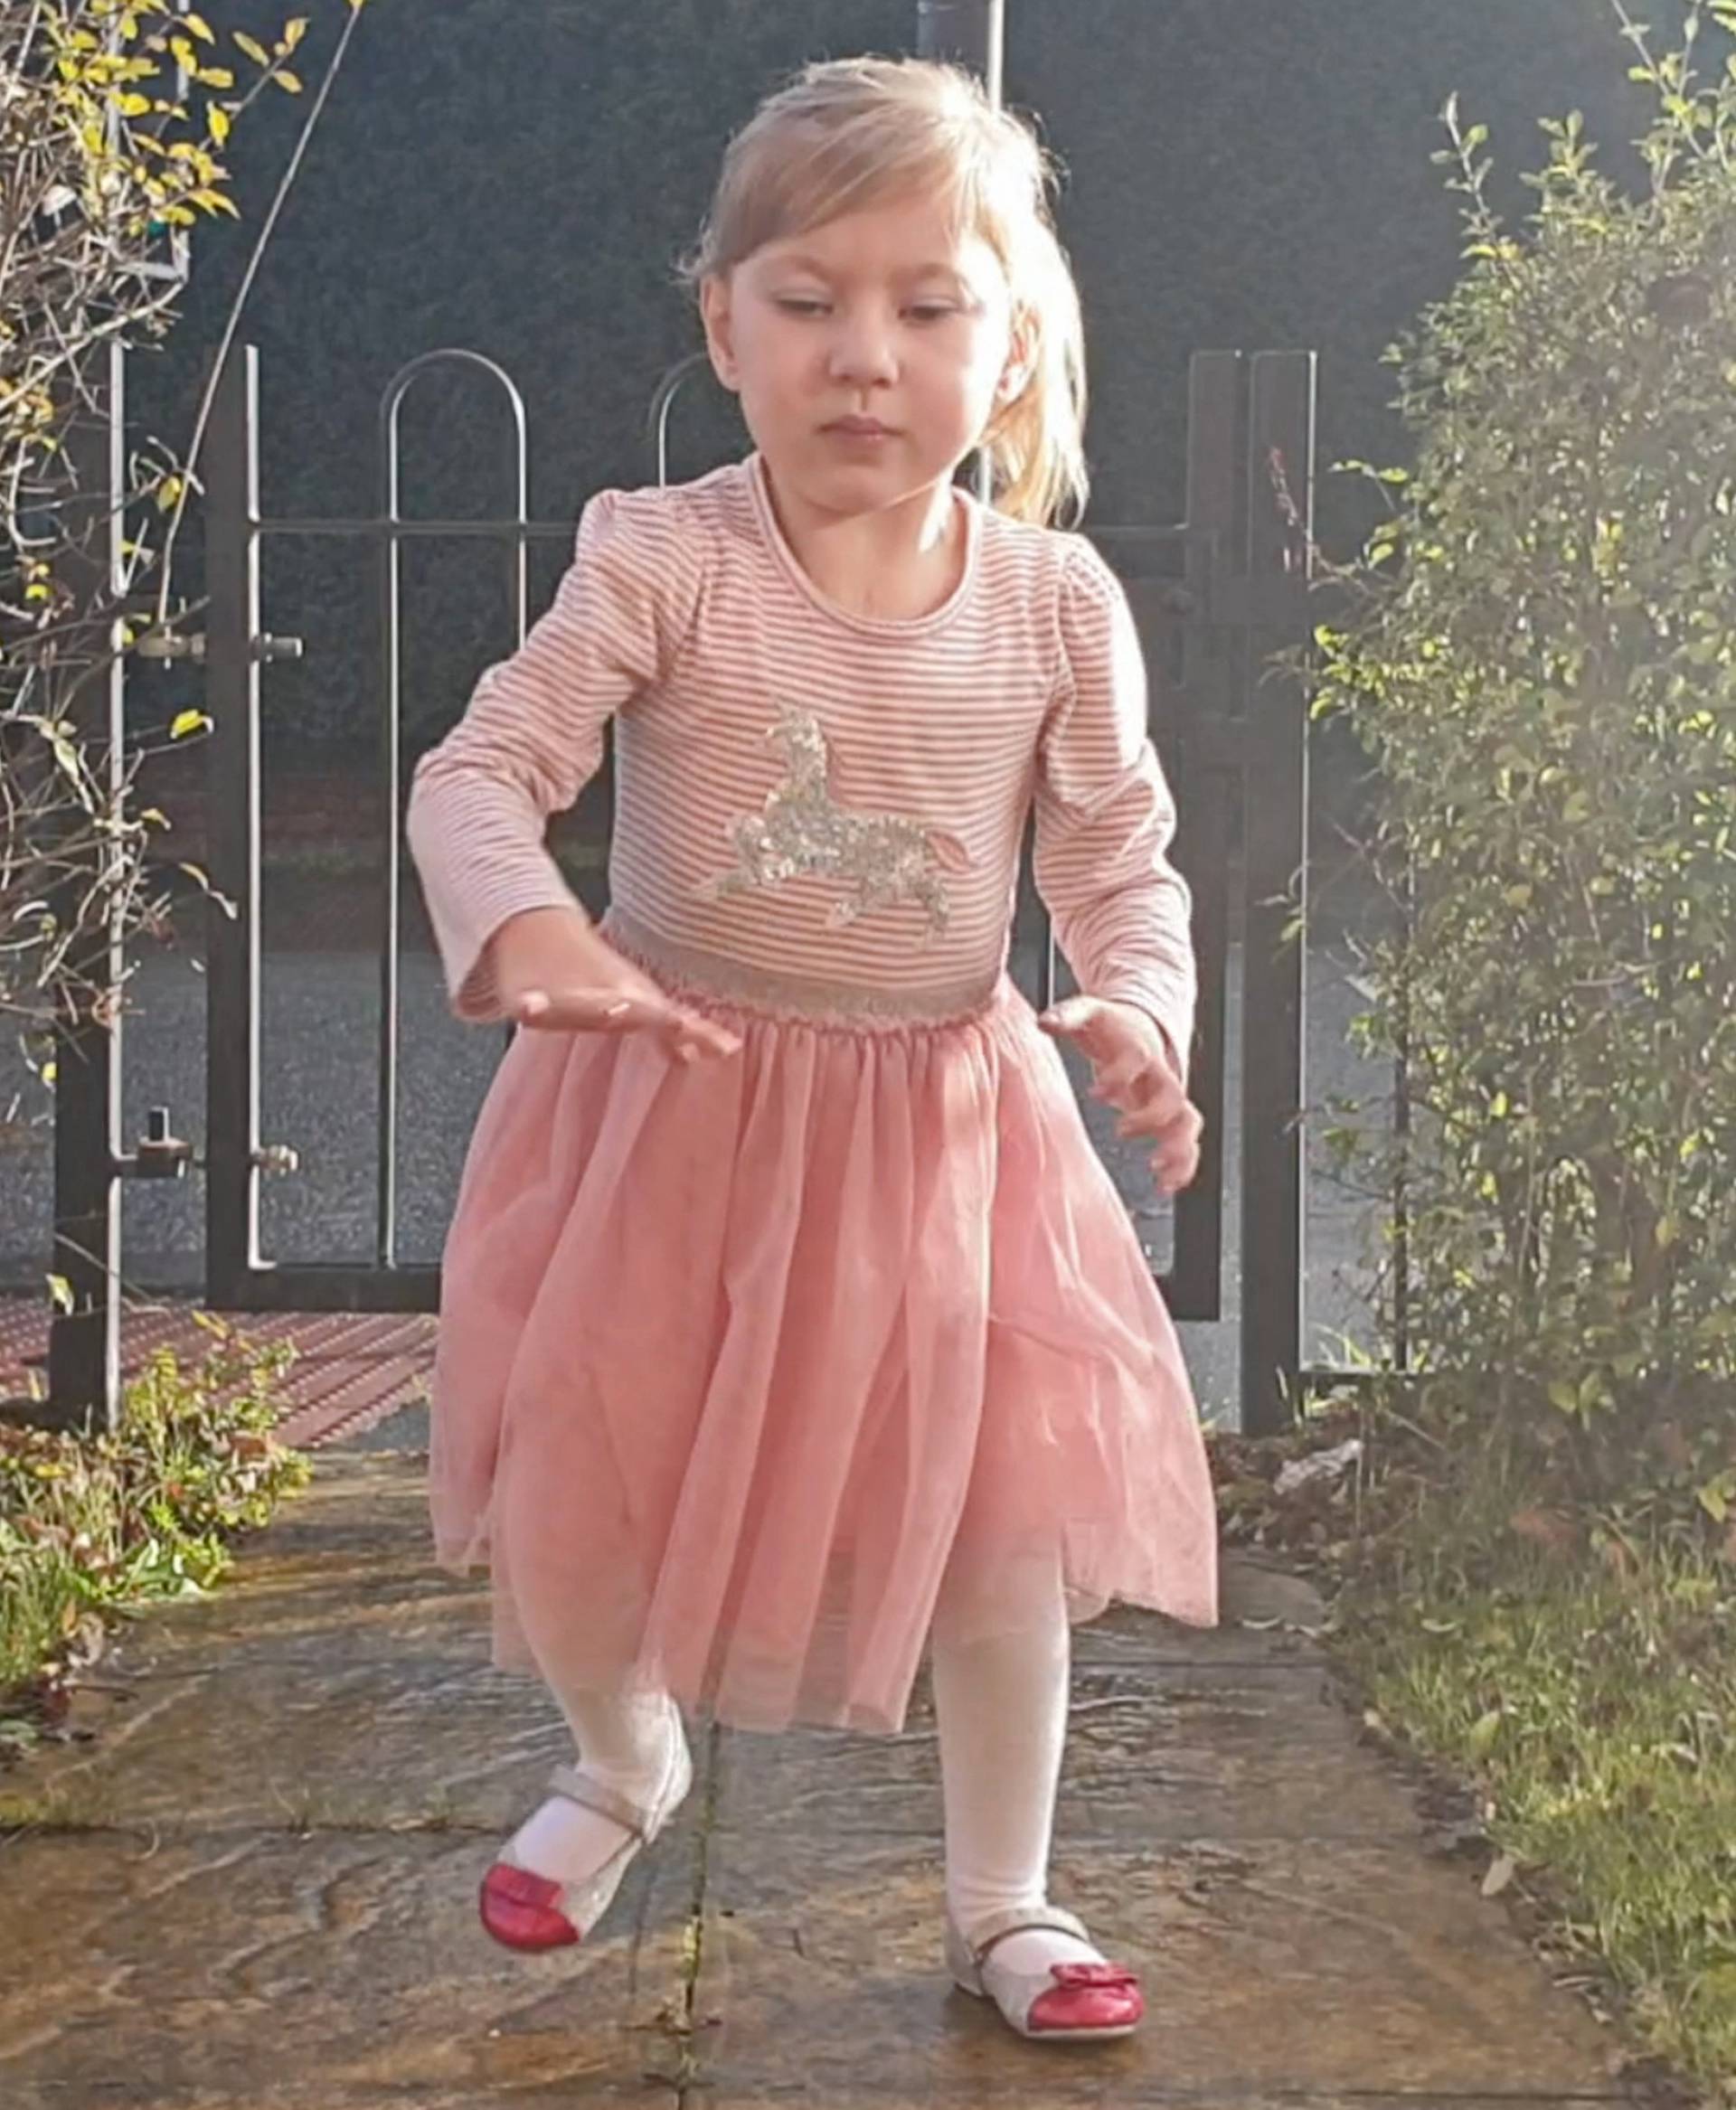 LITTLE GIRL WALKS AGAIN MIRACLE